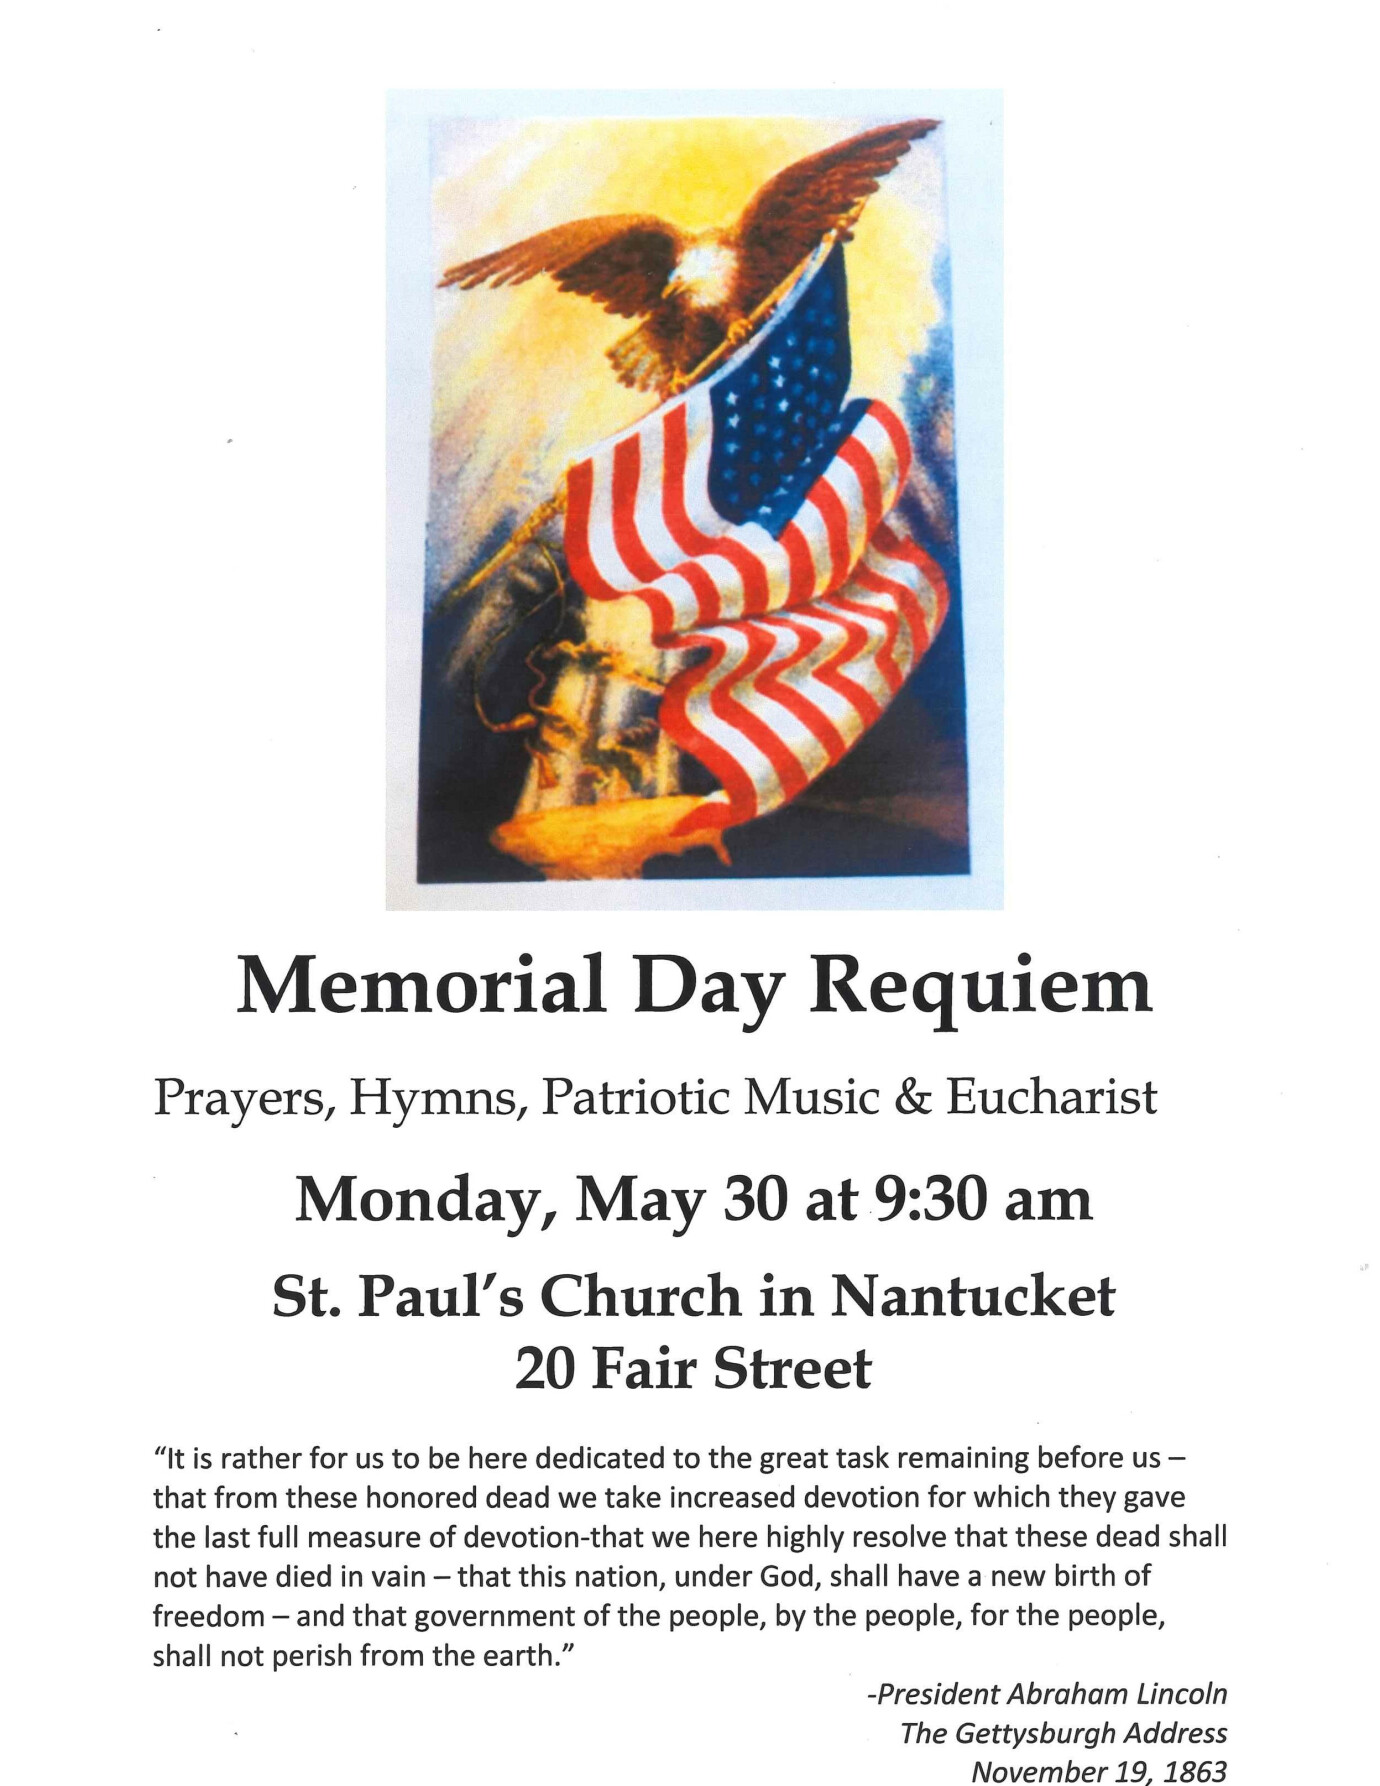 9:30am Memorial Day Requiem 